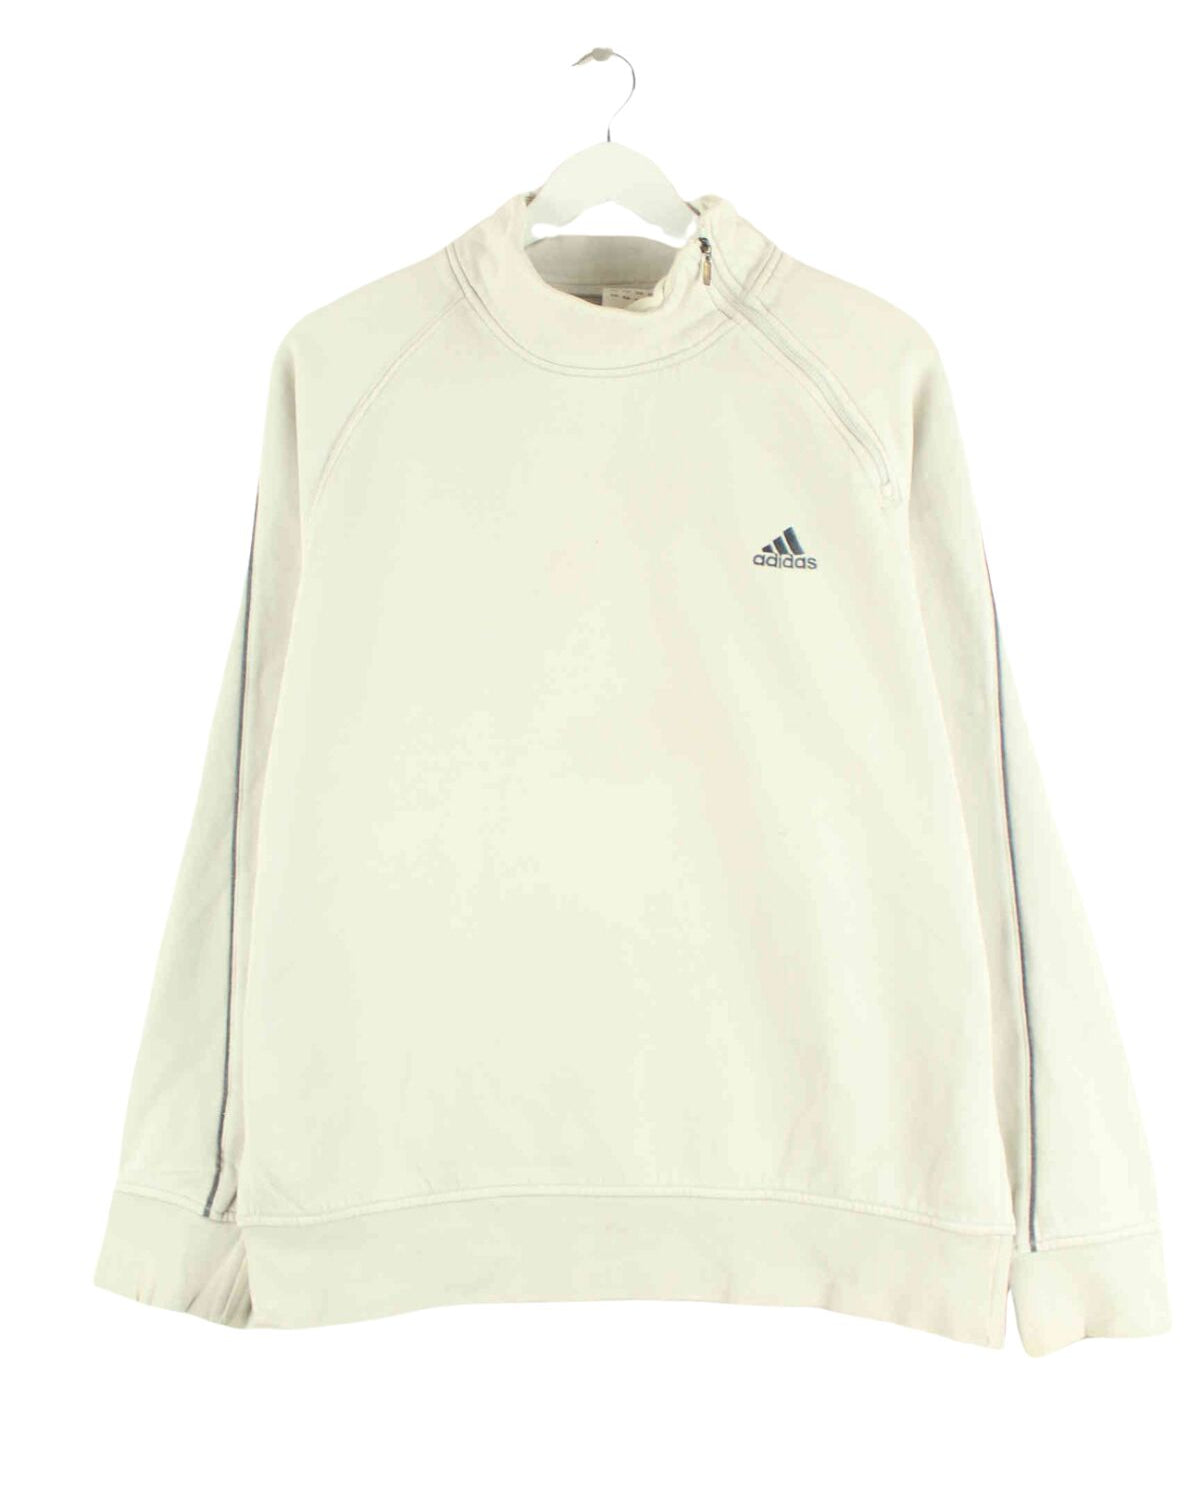 Adidas Damen Performance Sweater Beige L (front image)